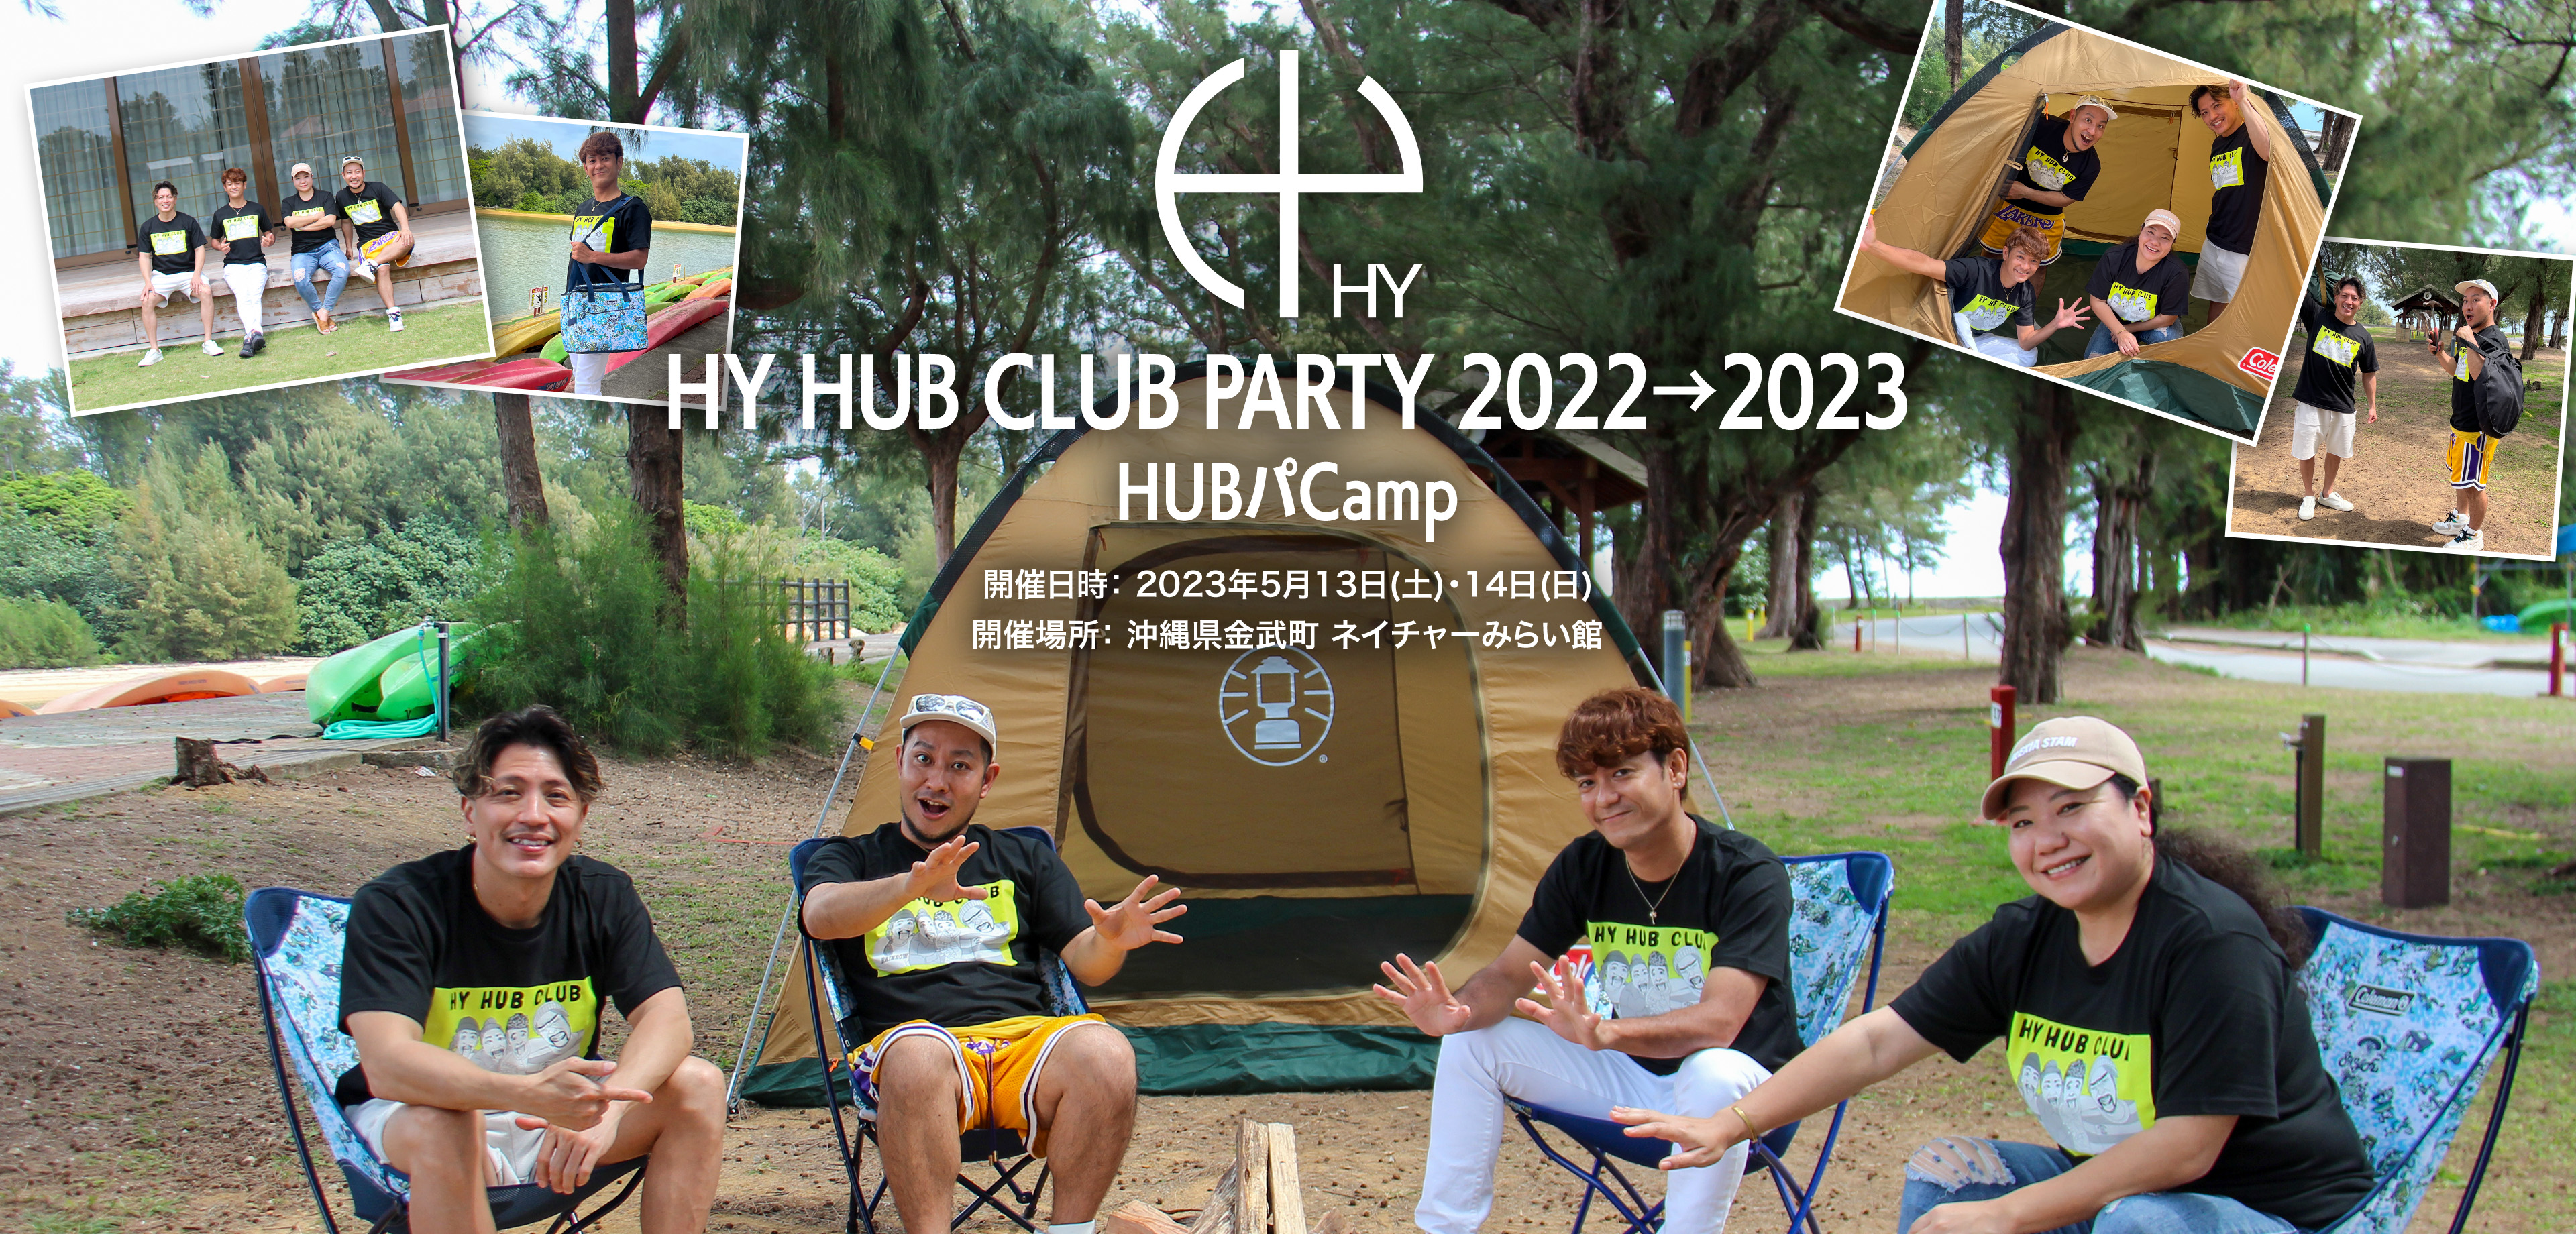 HY HUB CLUB PARTY 2022→2023